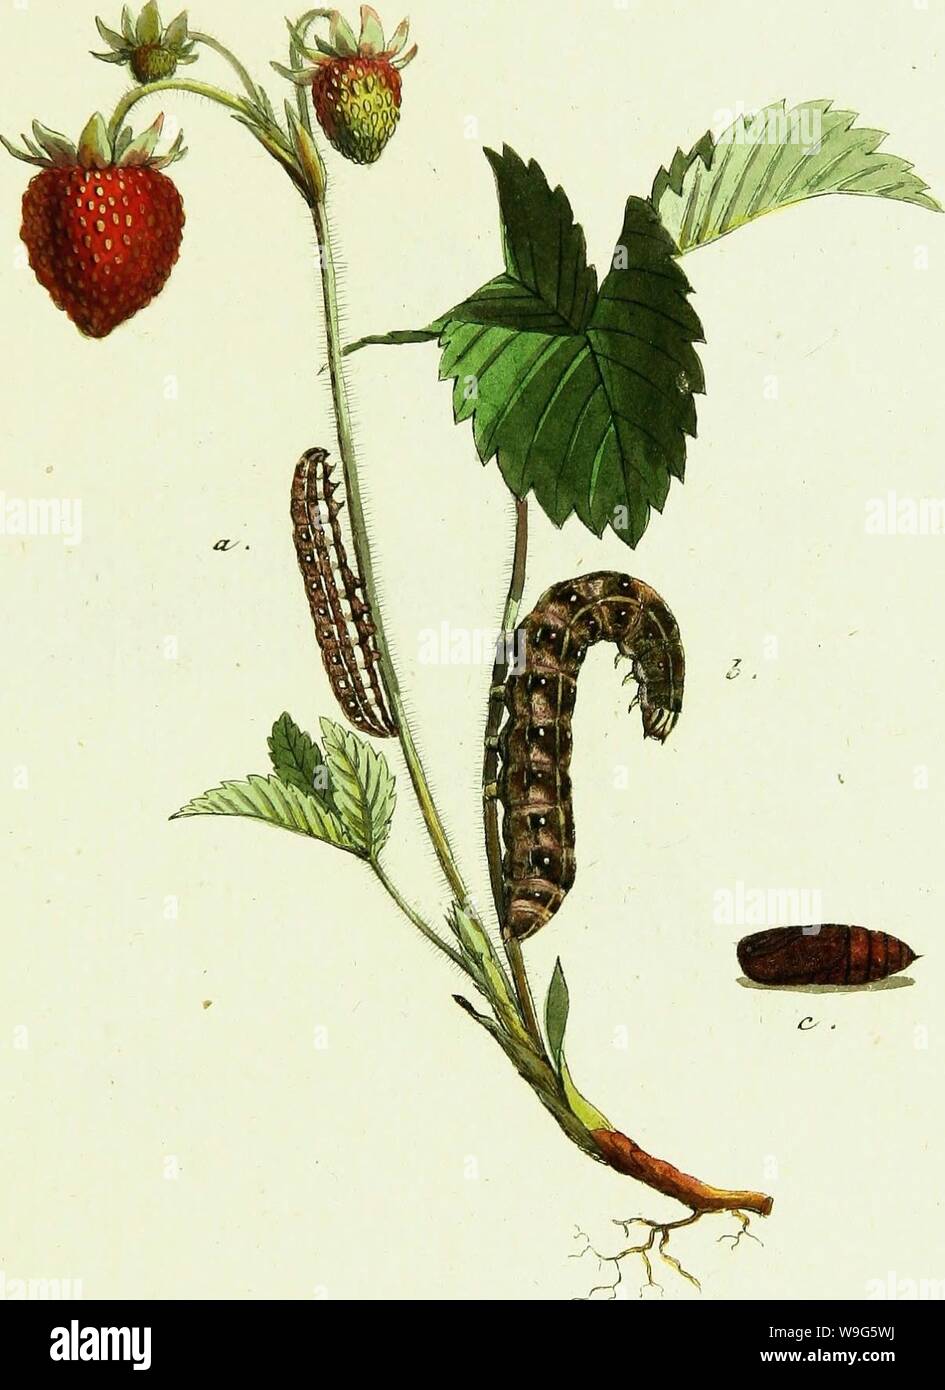 Immagine di archivio da pagina 118 di Geschichte europäischer Schmetterlinge (1806). Geschichte europäischer Schmetterlinge CUbiodiversity1742385-9606 Anno: 1806 ( Jo.JK SQ&£&lt;zs, JT. -Sseman£&, G  i . 3. o . tf/itiZ'ri&e/jz . Foto Stock